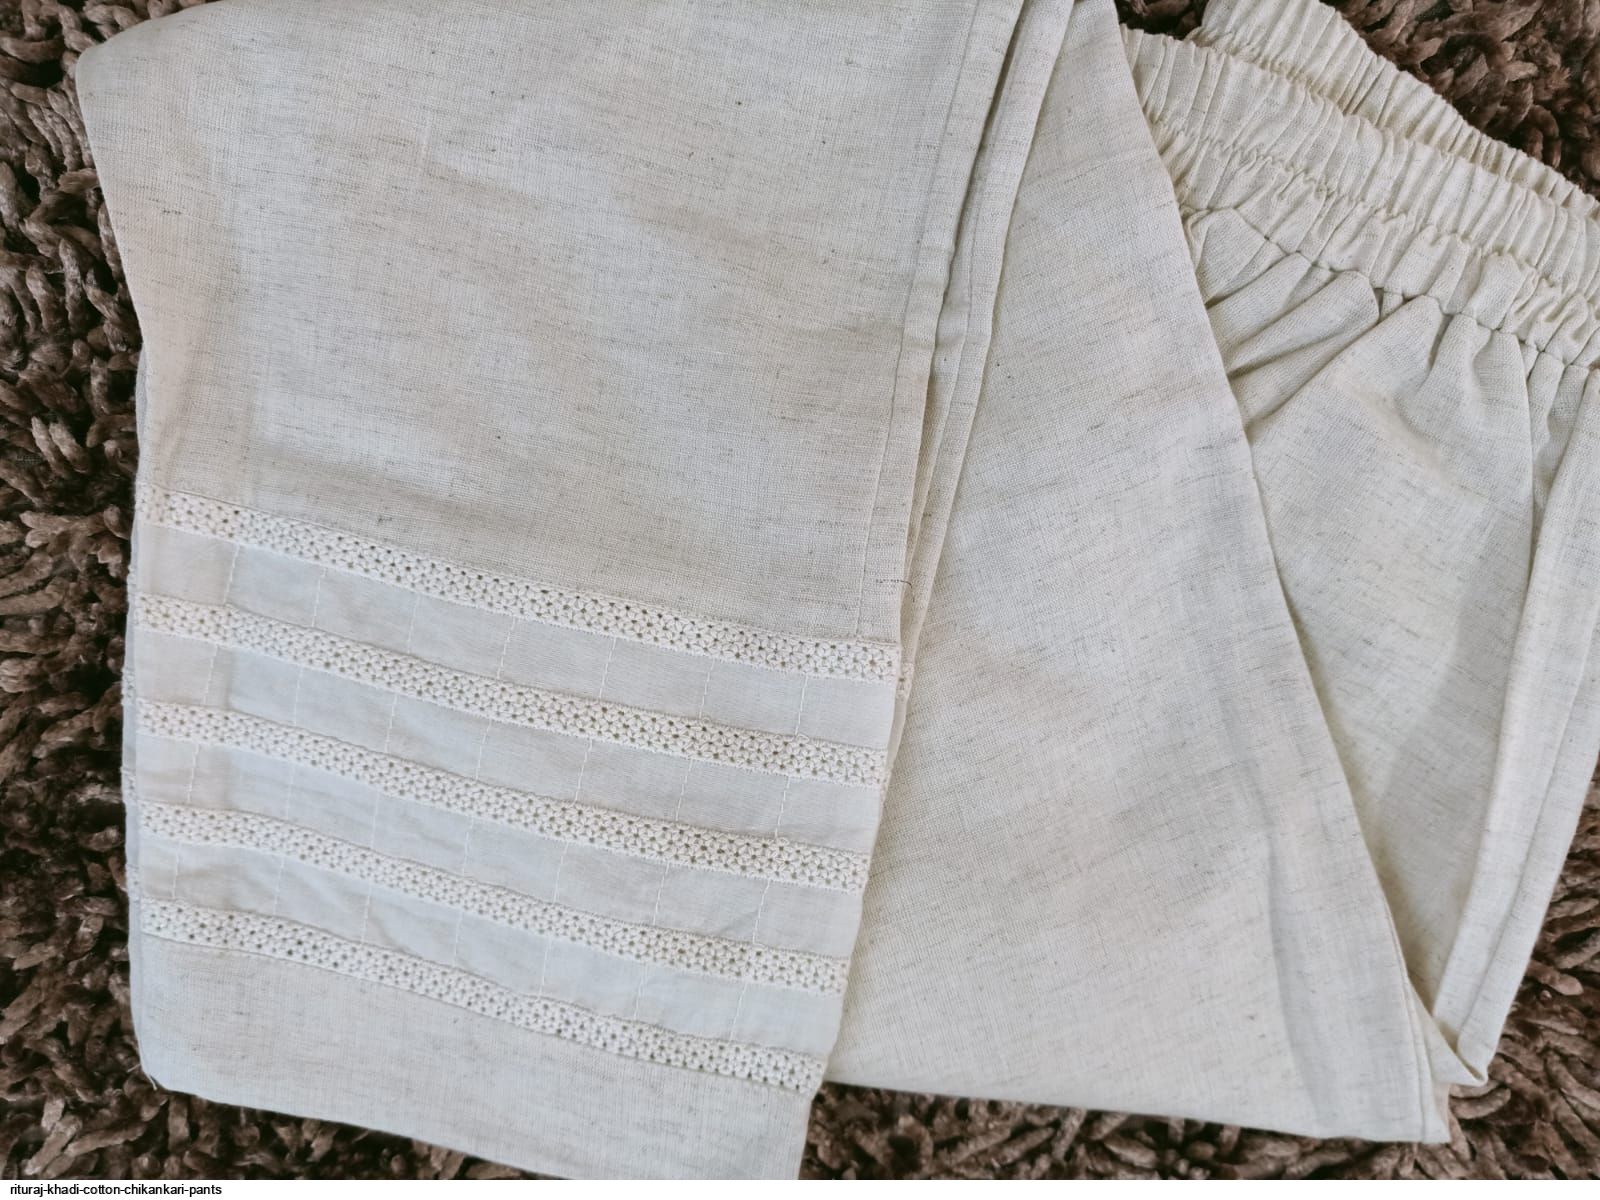 rituraj khadi cotton chikankari pants 6197